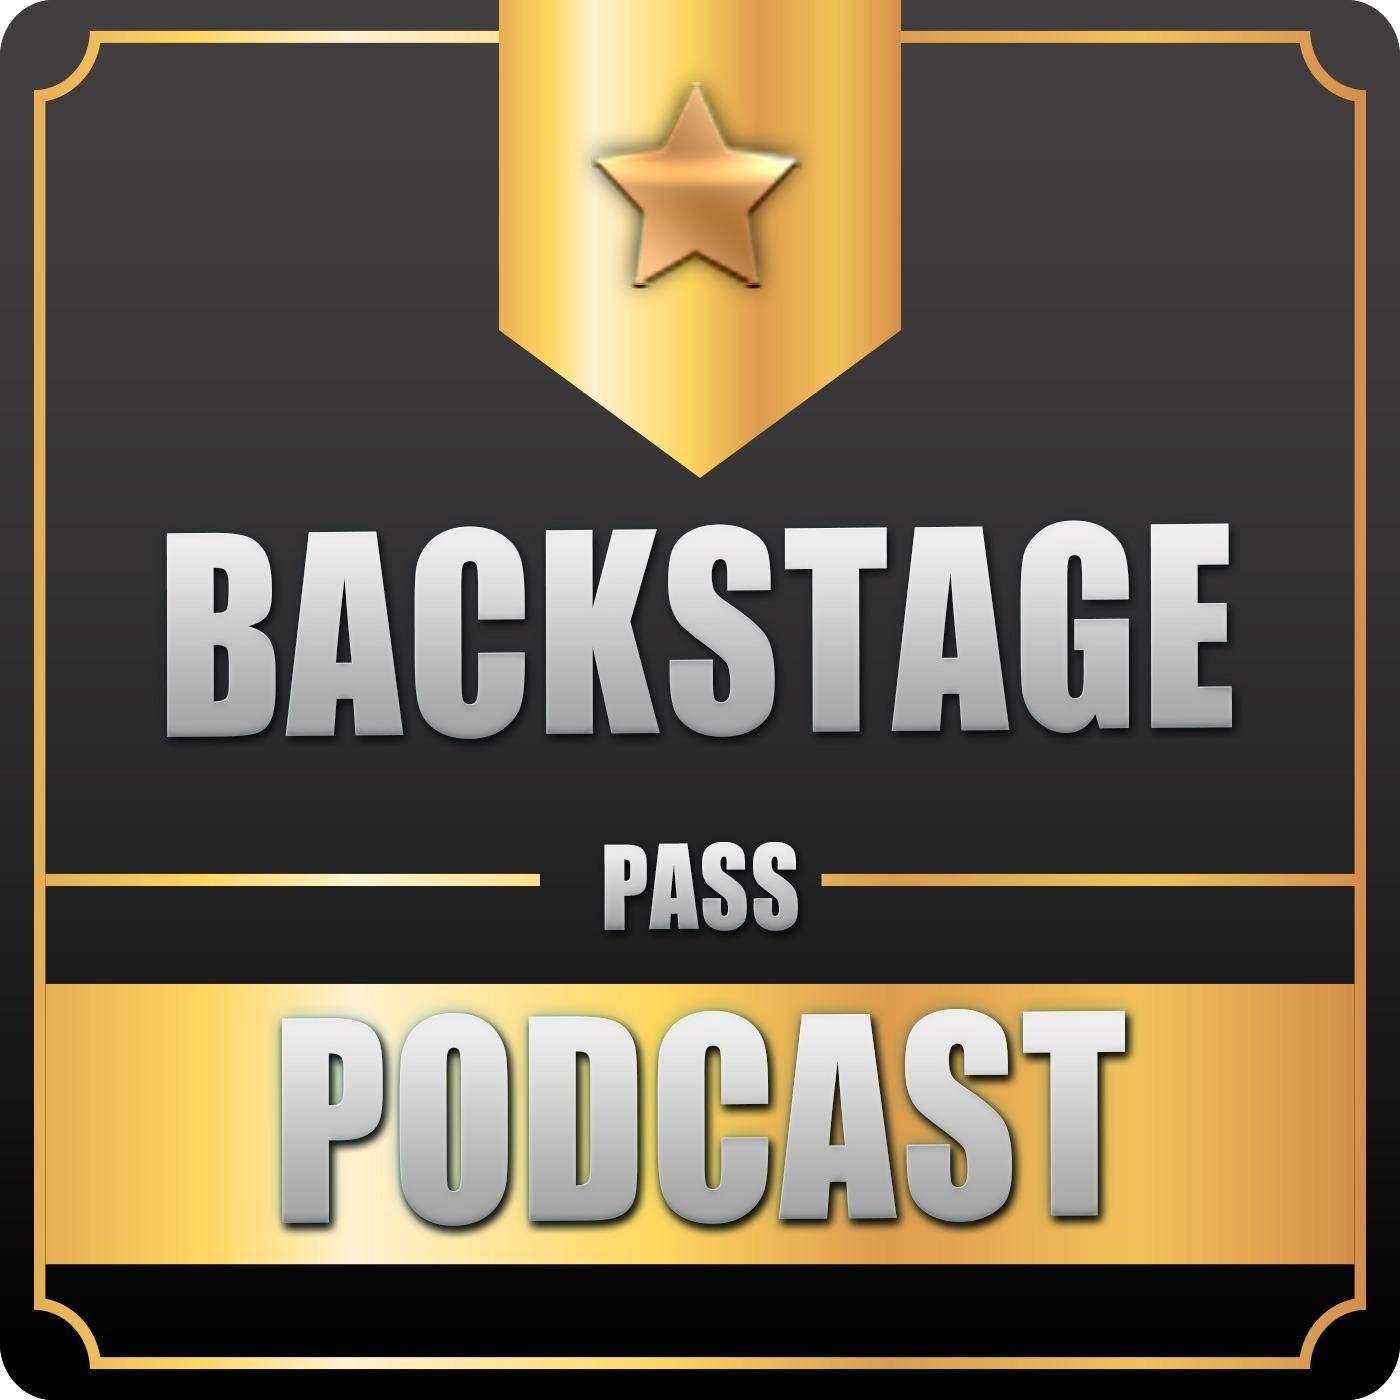 Backstage Pass Podcast